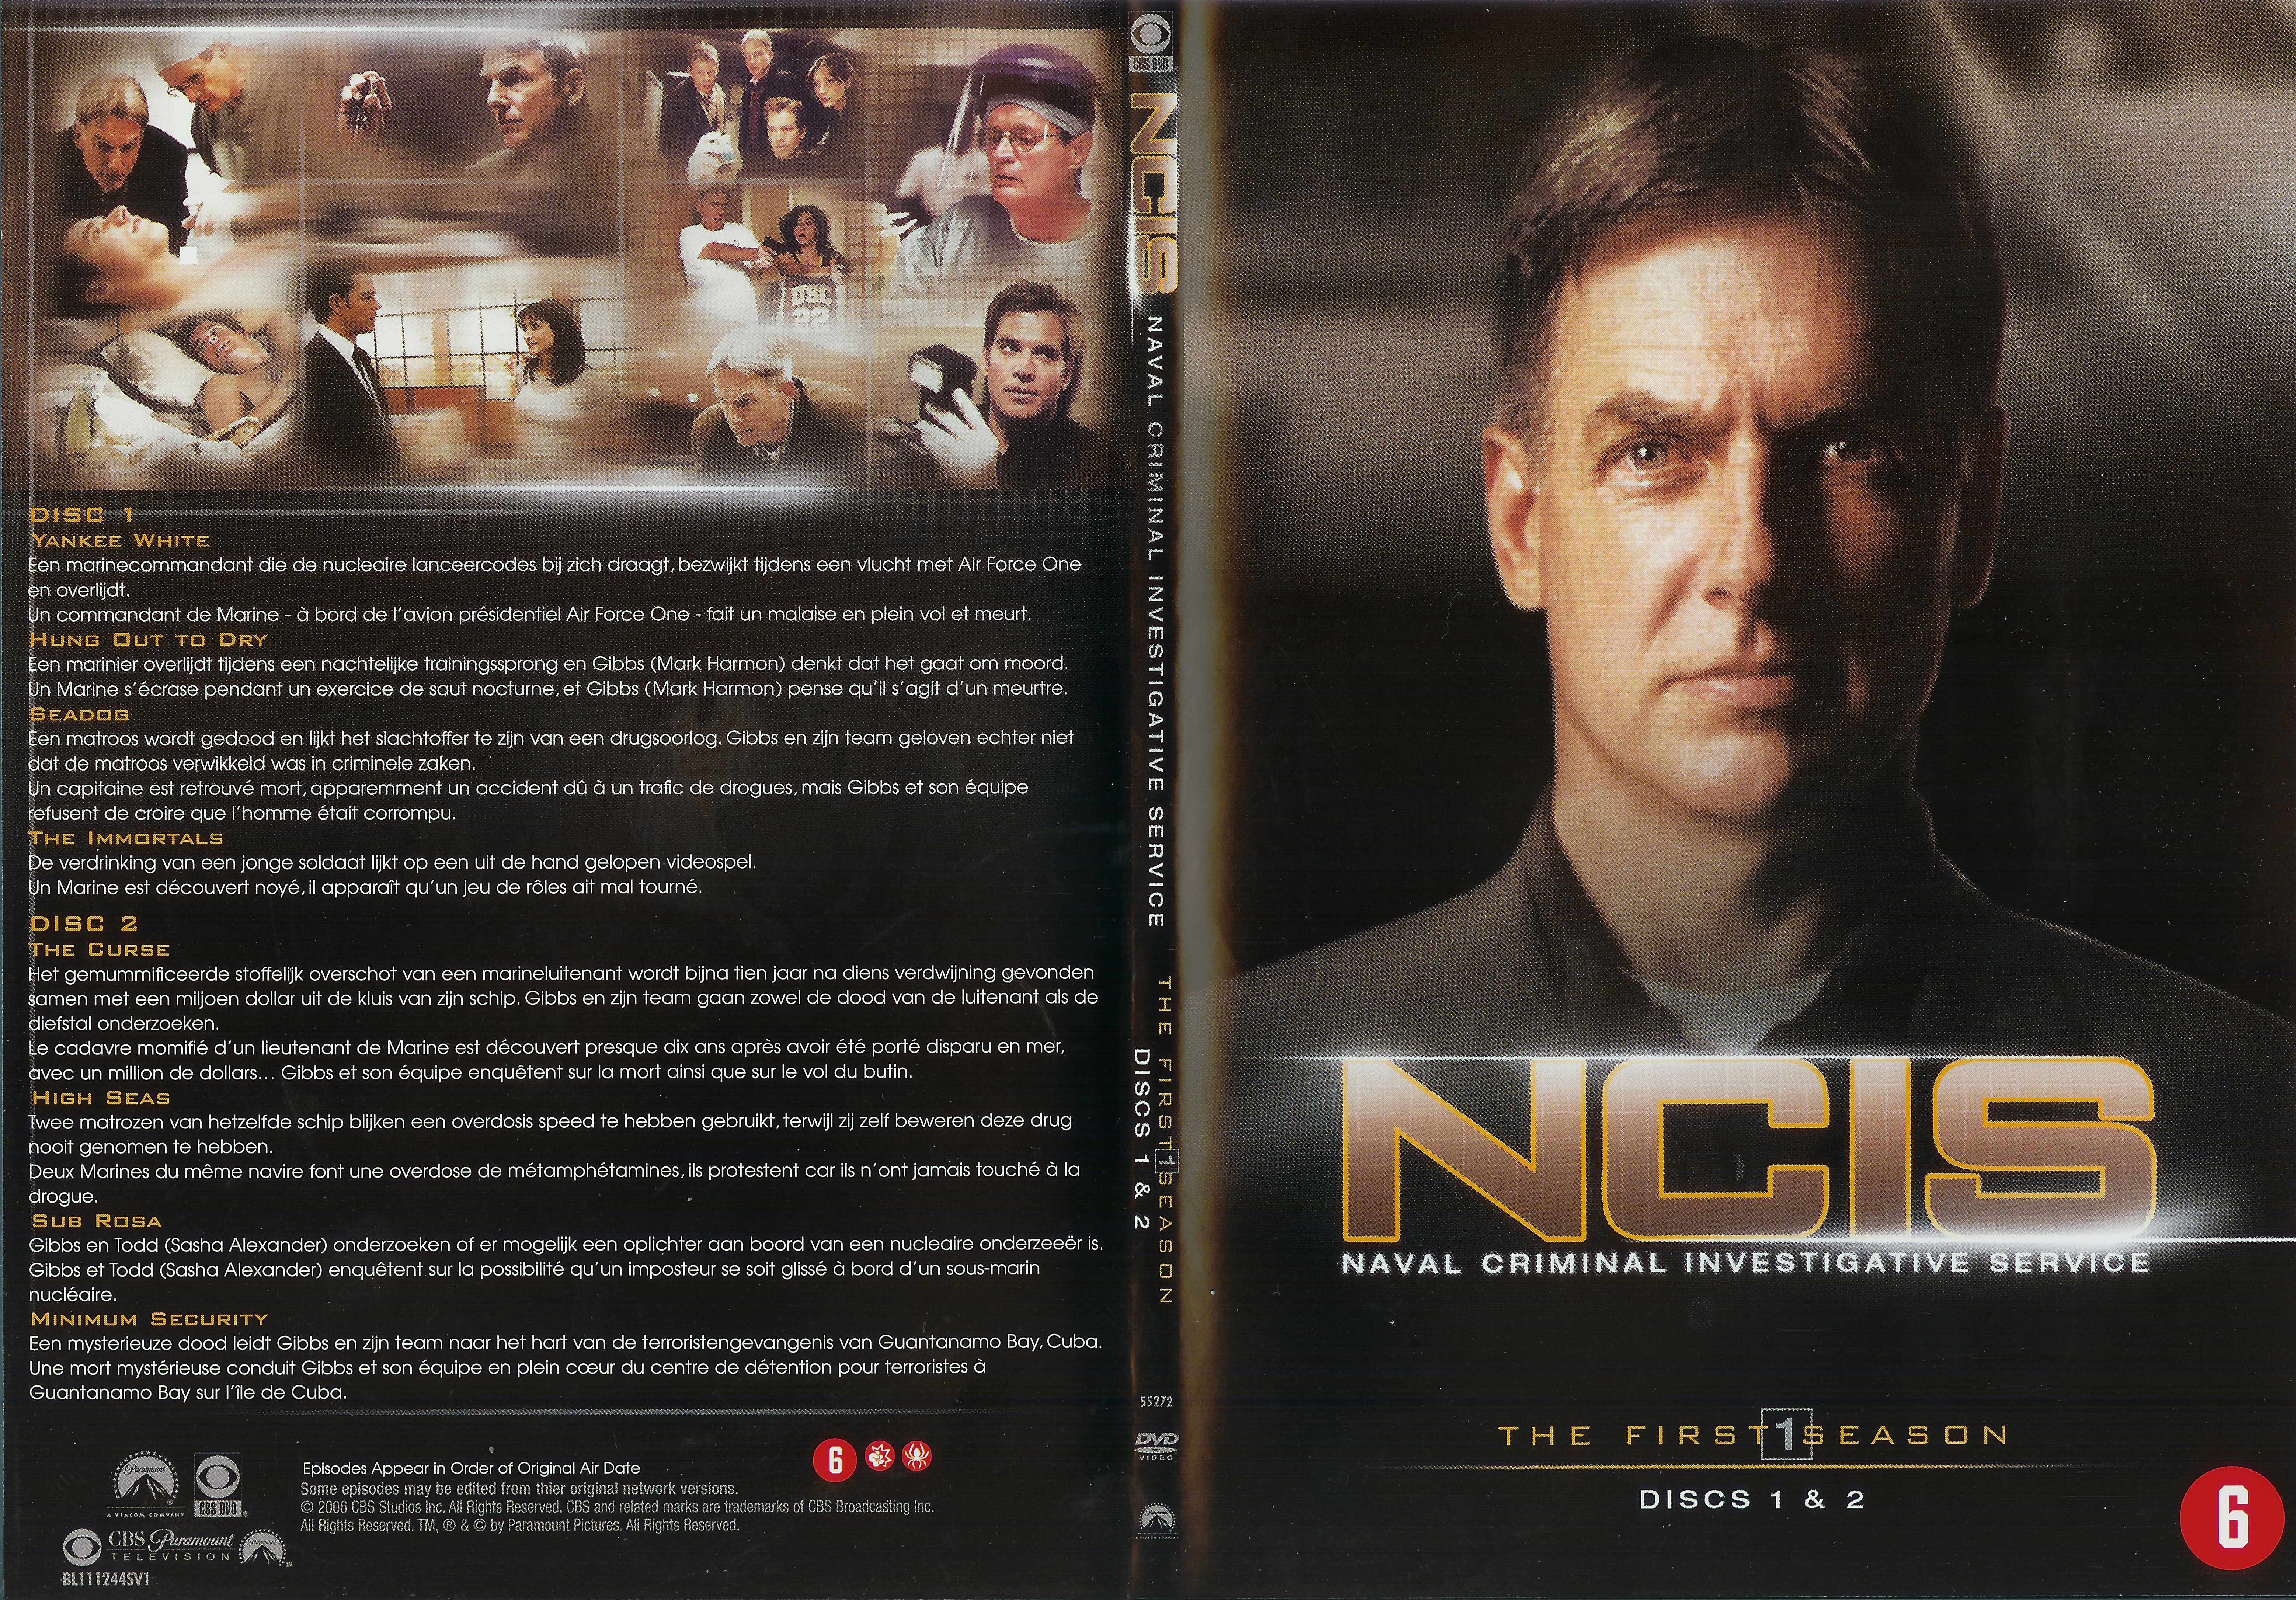 NCIS Cover disc 1 & 2